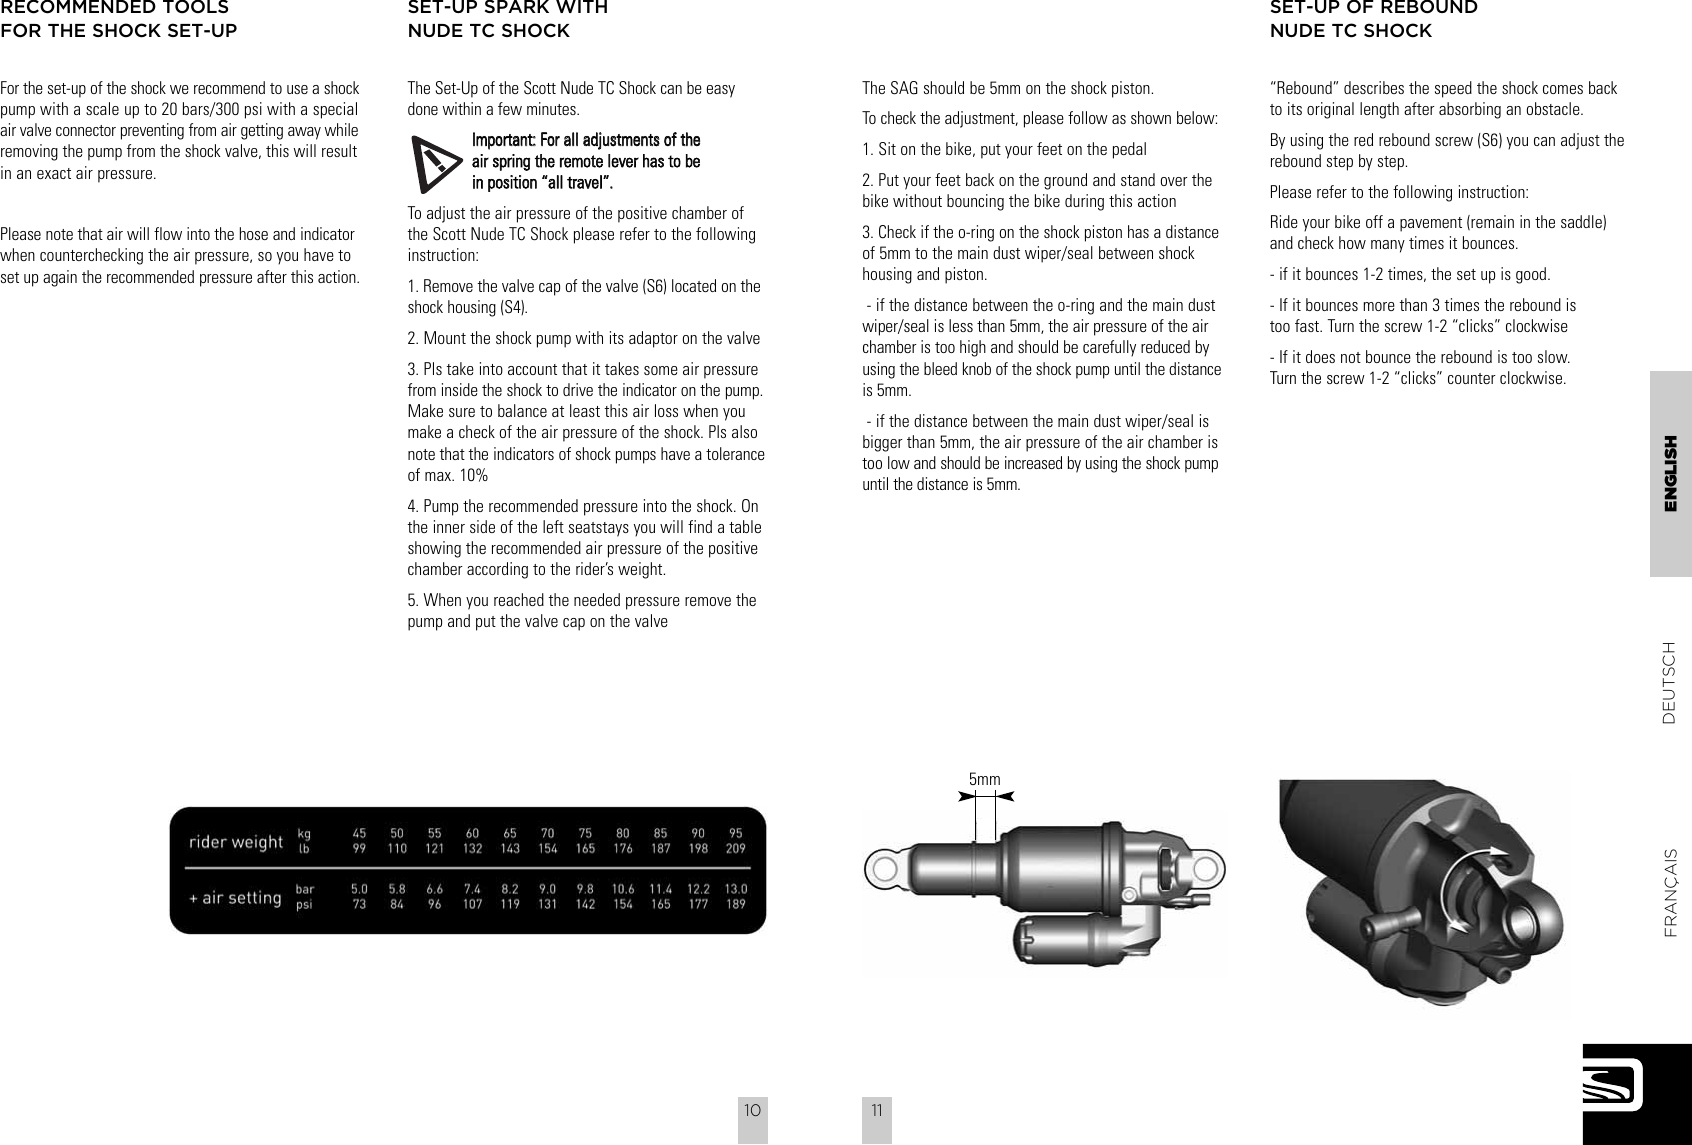 Page 7 of 11 - 2009 Manual U Spark Gb Web